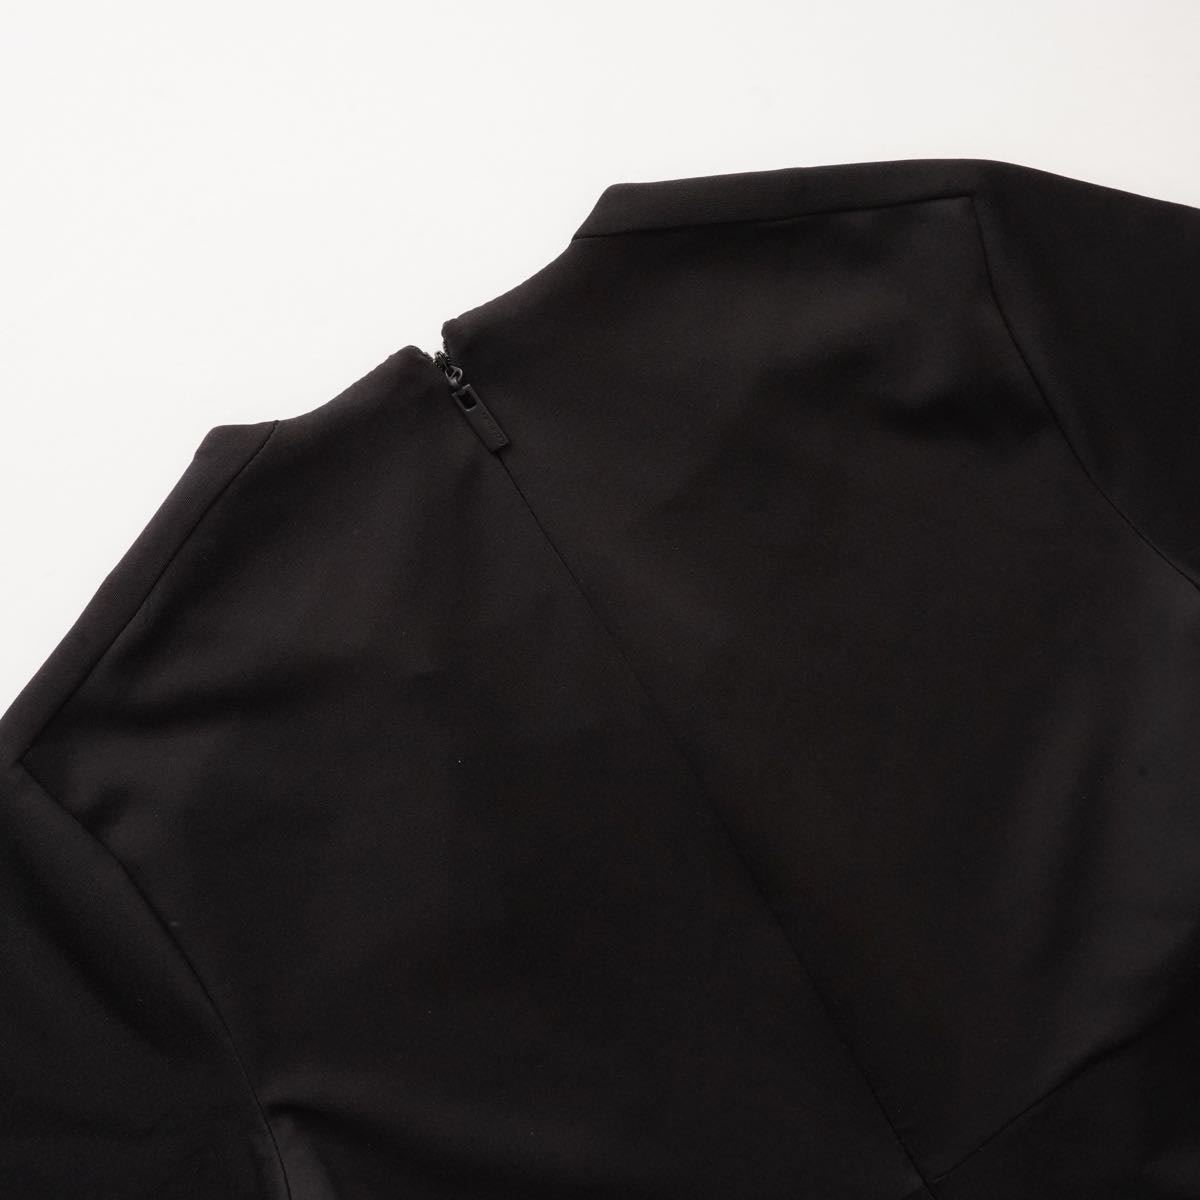 CK カルバンクライン ブラック 半袖ワンピース ストレッチドレス CALVIN KLEIN BLACK SHORT SLEEVES STRETCH DRESS WOMENS